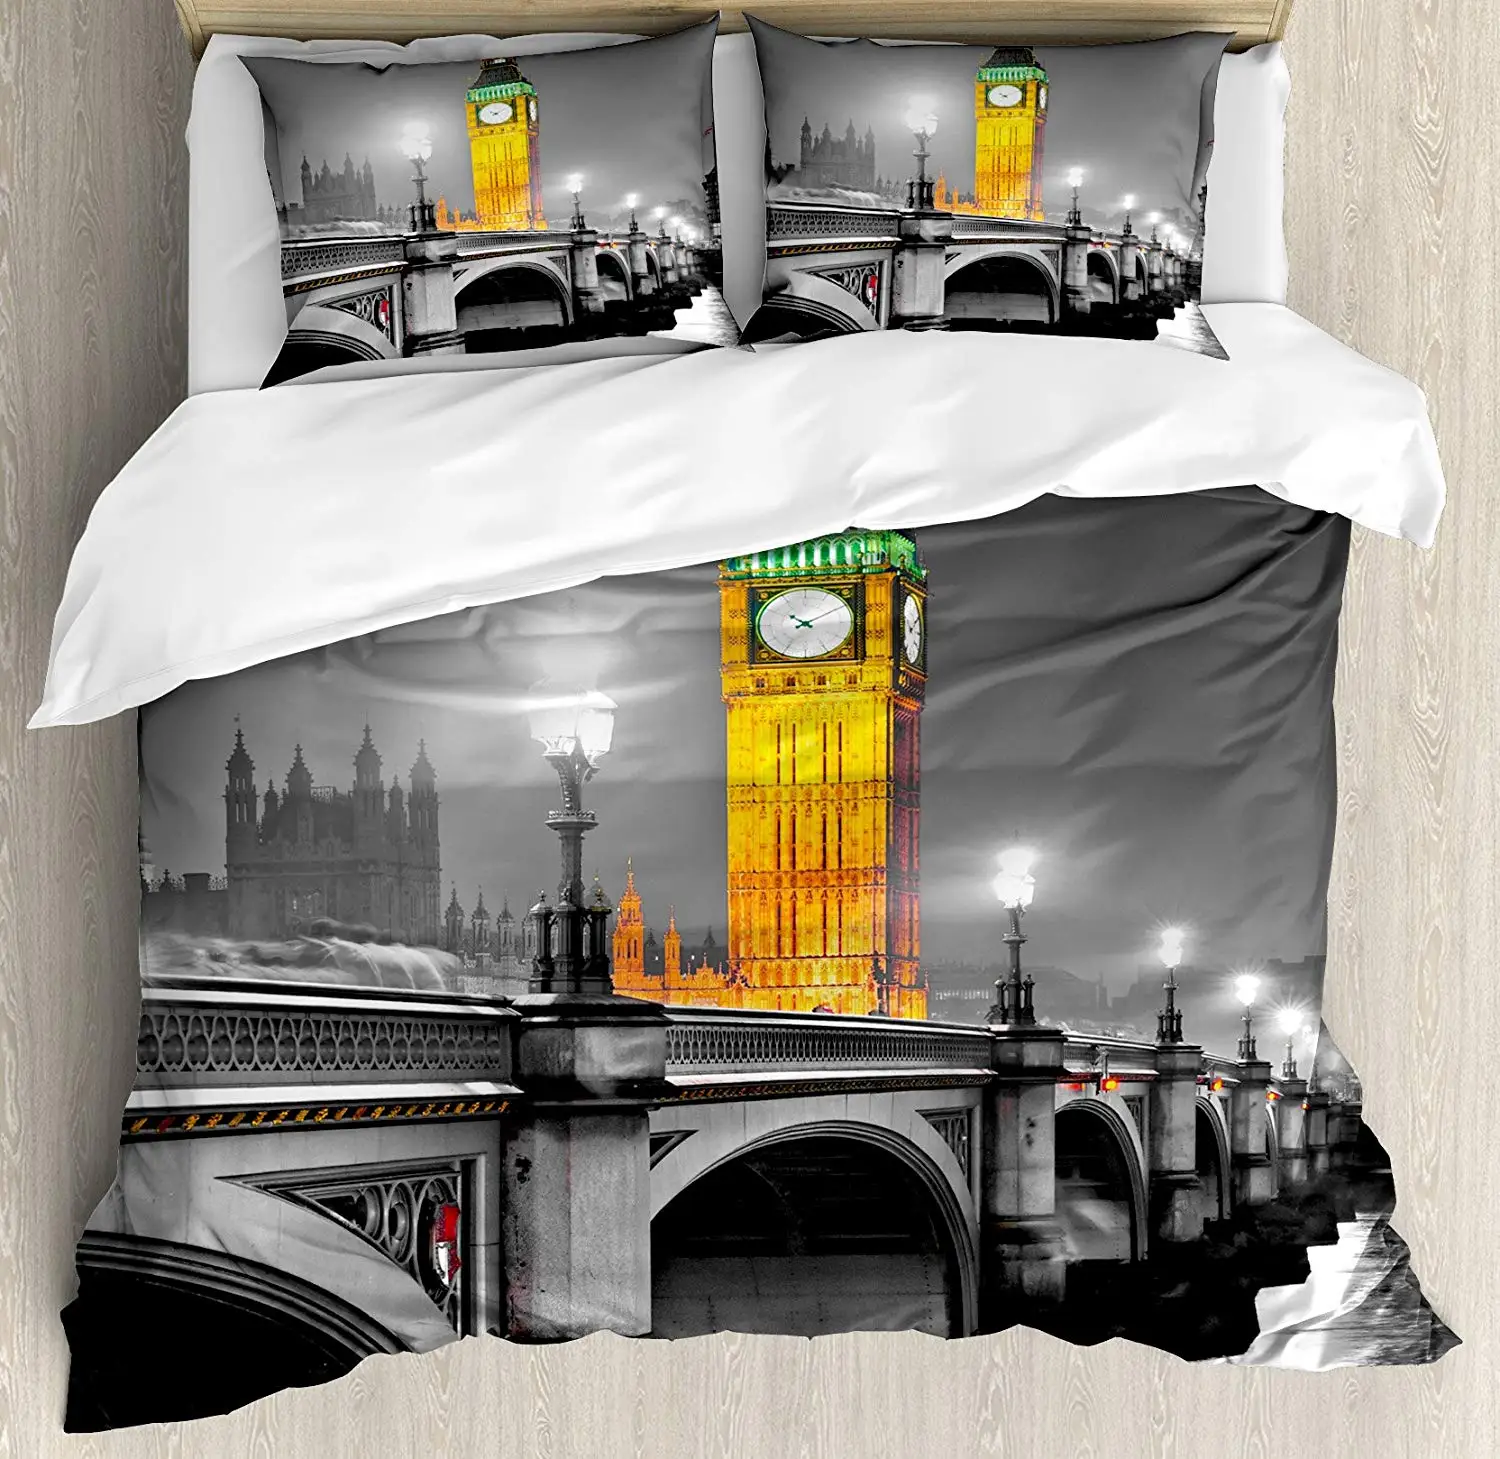 

London Duvet Cover Set King Size The Big Ben The Westminster Bridge at Night in UK Street River European Look Bedding Set